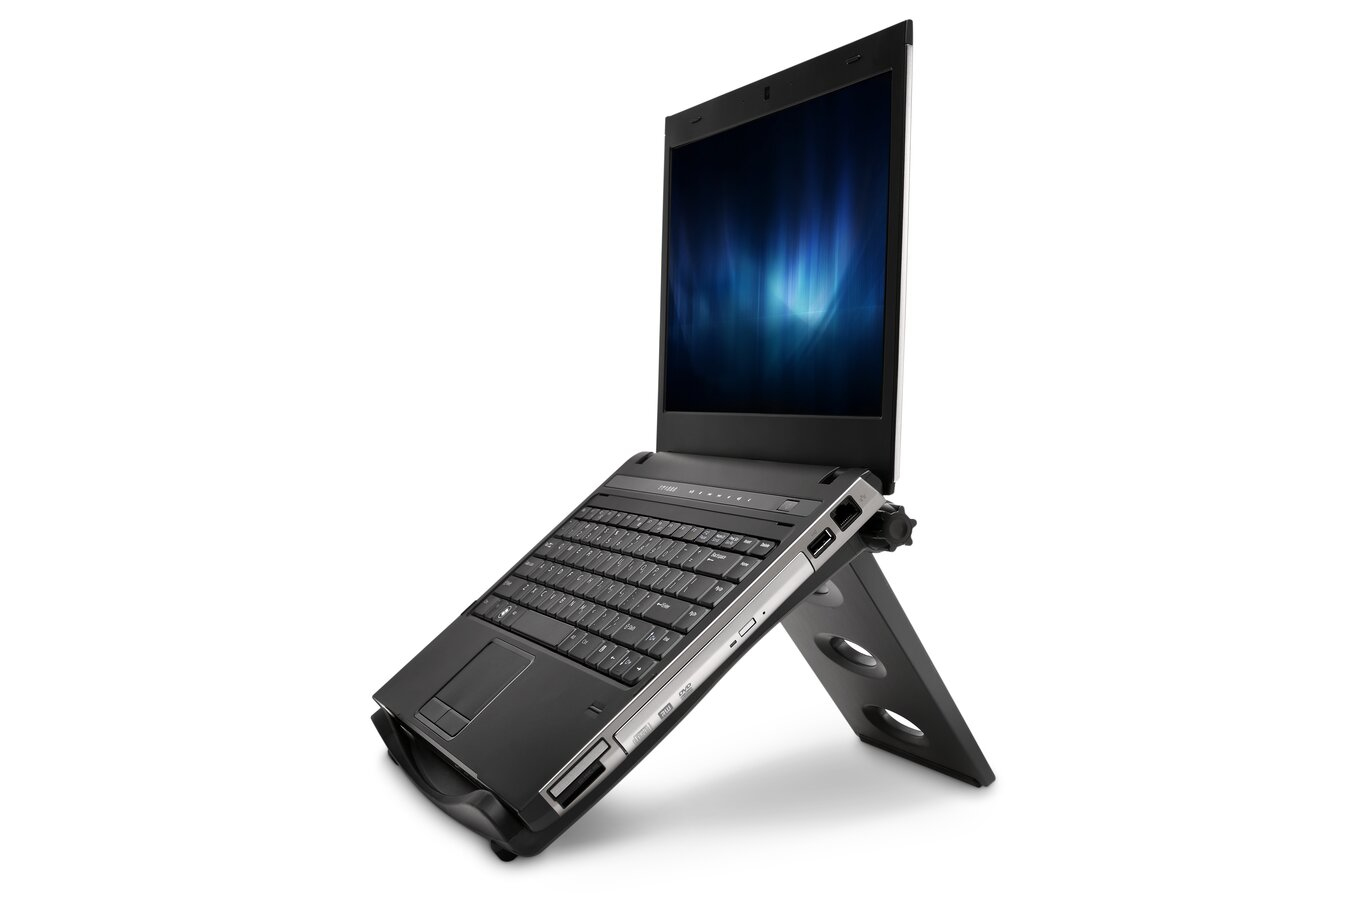 Kensington SmartFit Easy Riser Laptop Stand Black K52788WW